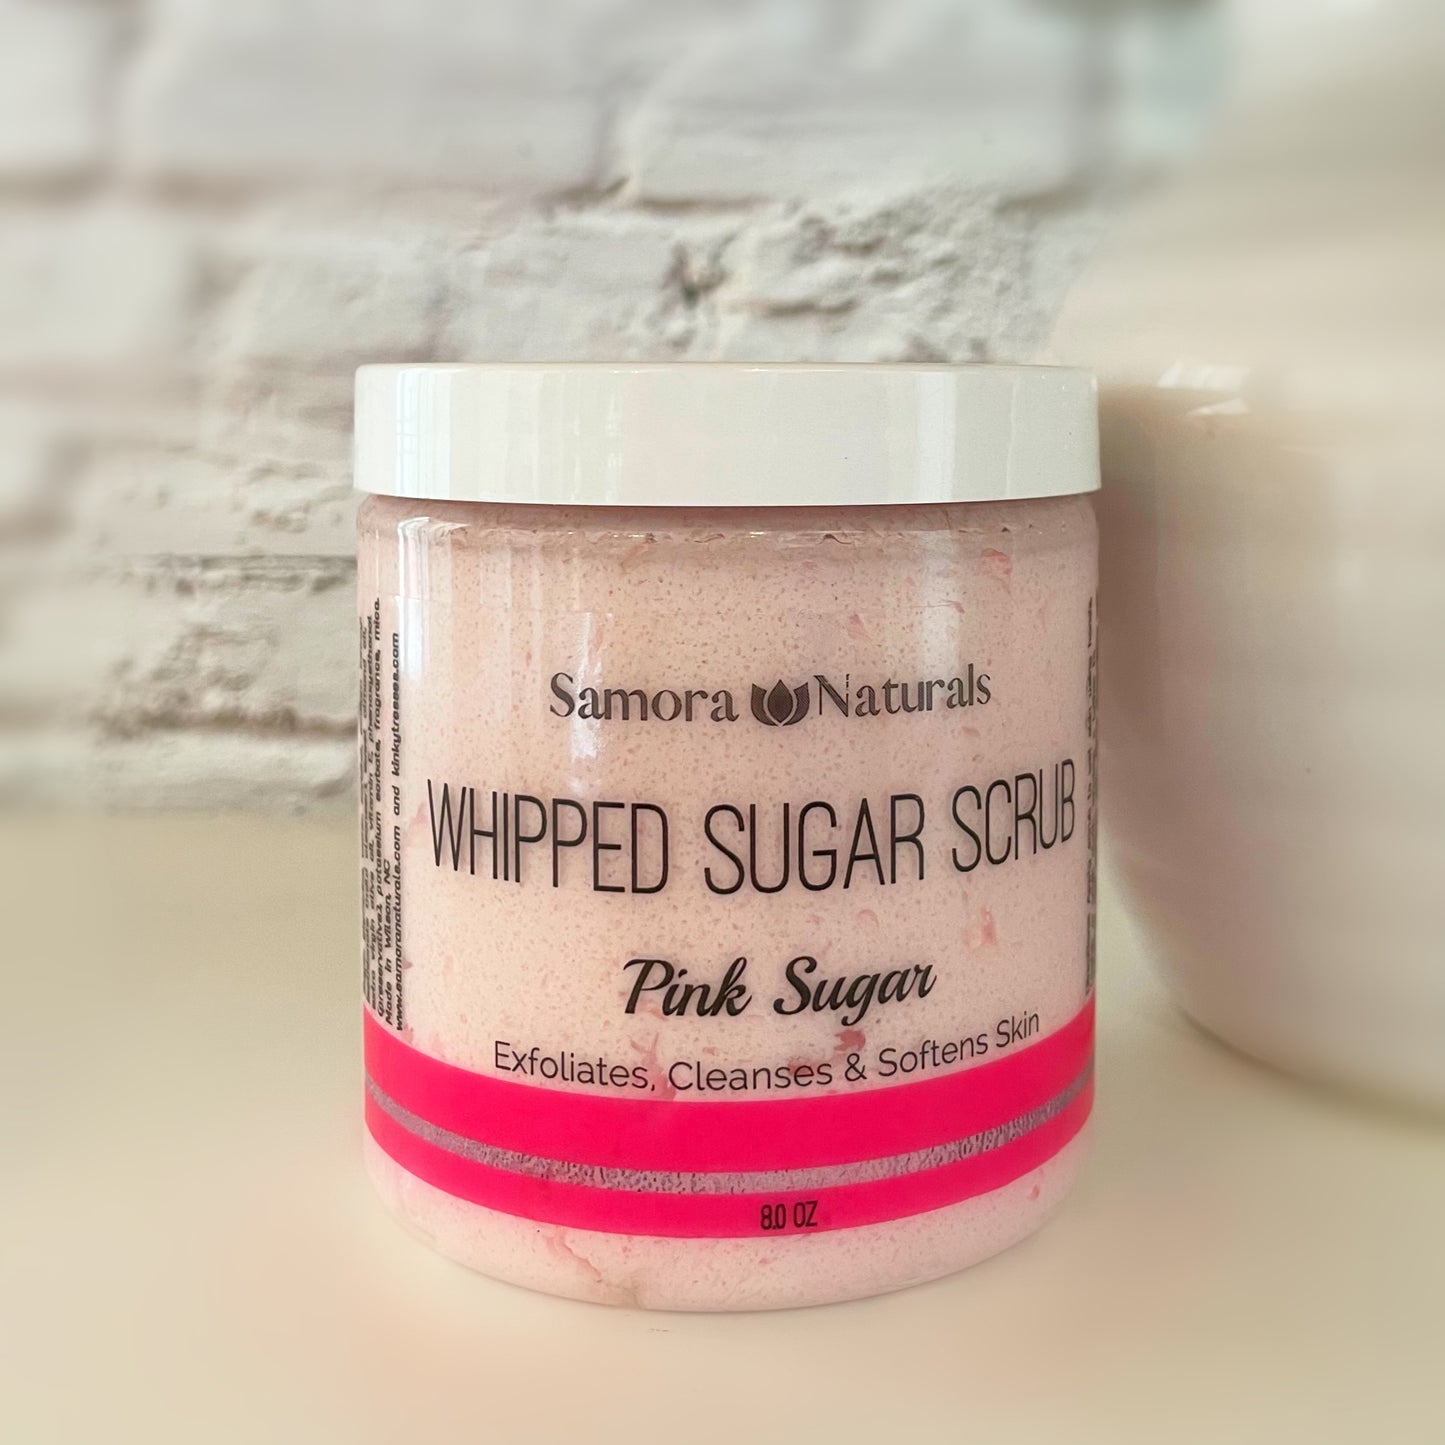 Pink Sugar Whipped Sugar Scrub